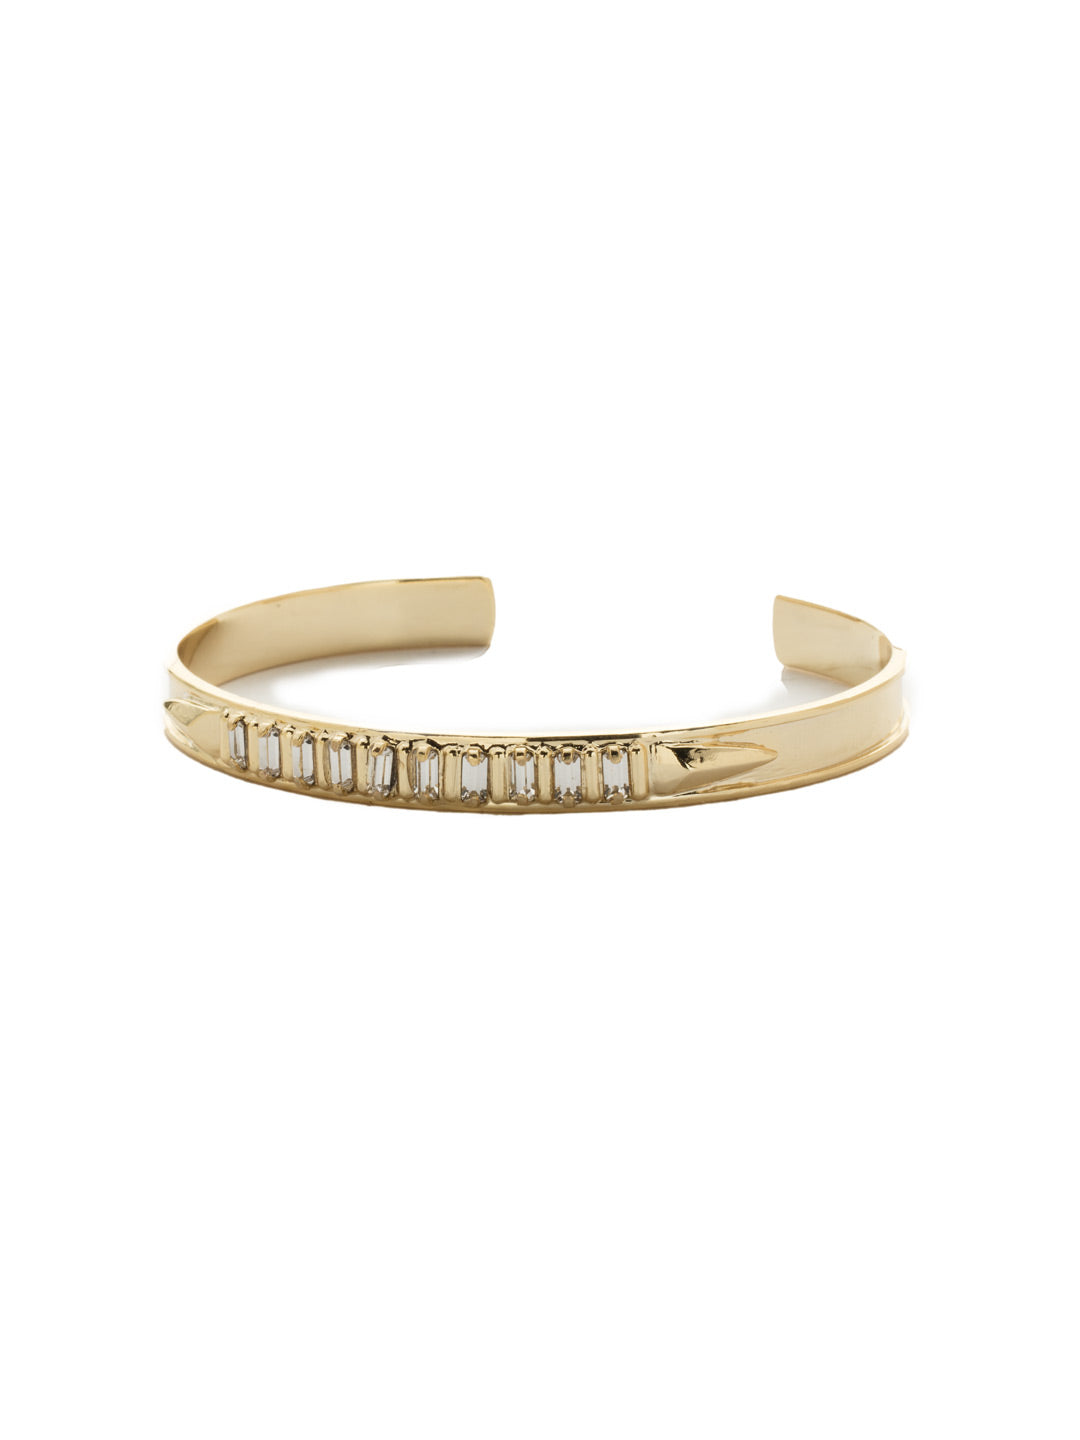 Product Image: Radiantly Radial Crystal Cuff Bracelet